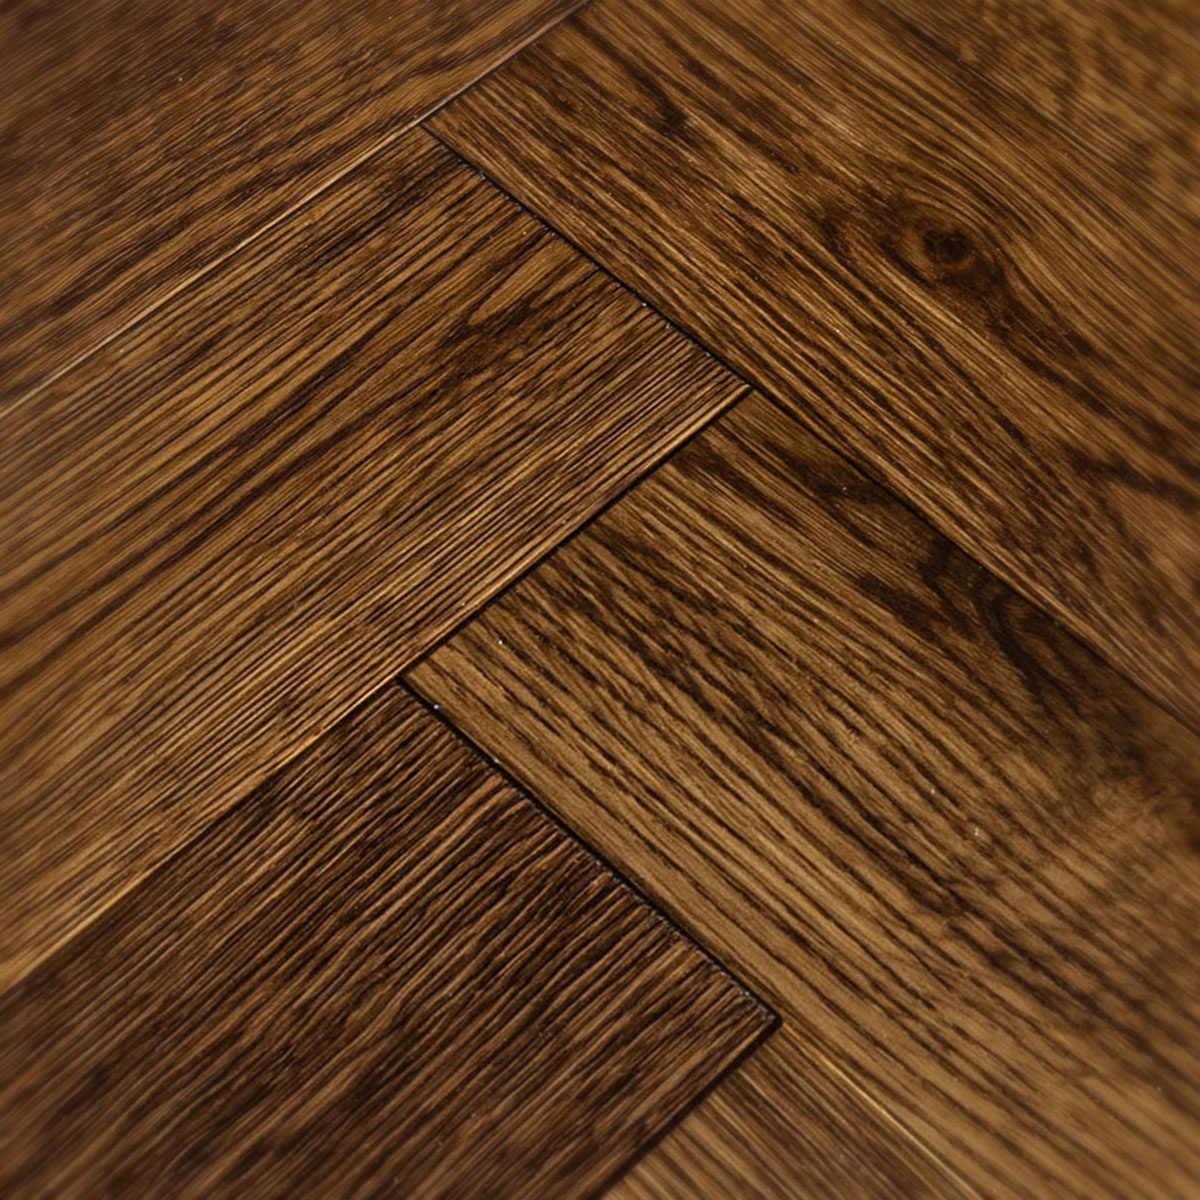 Cuckoo Road - Bronze Coloured Herringbone Wood Floor